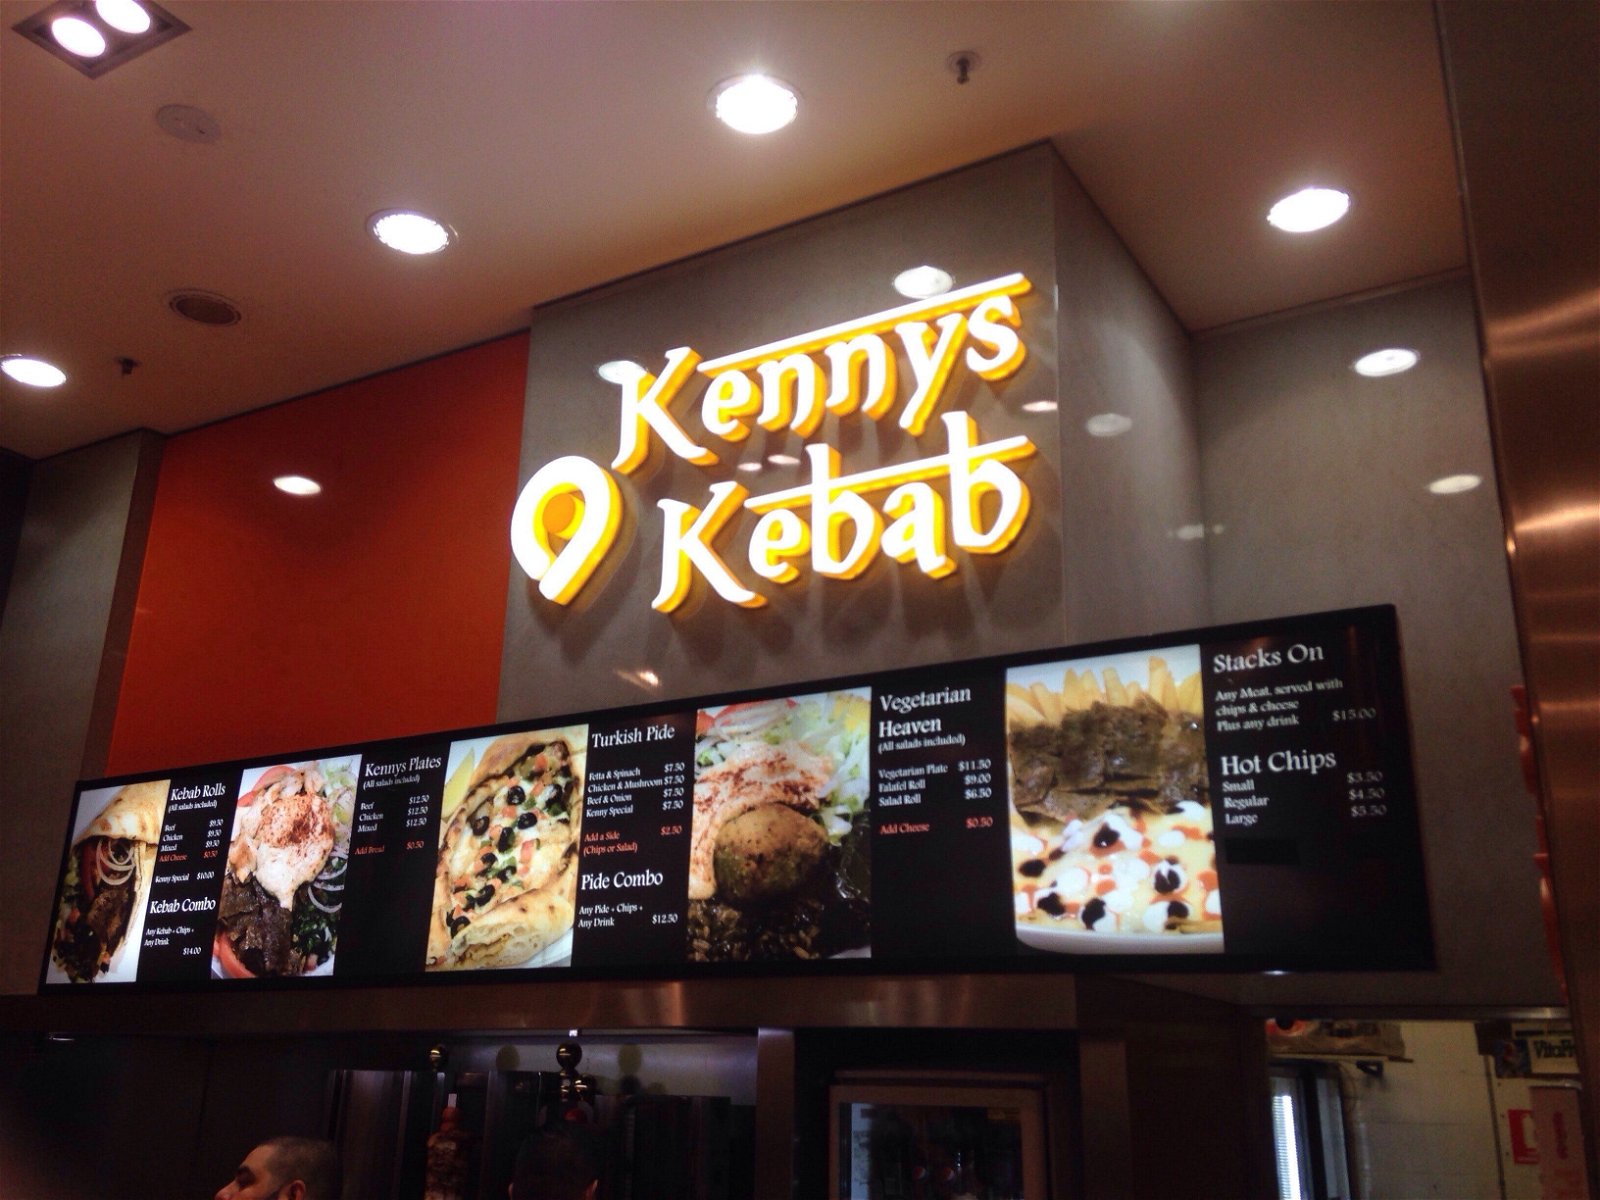 Kennys Kebab - Food Delivery Shop